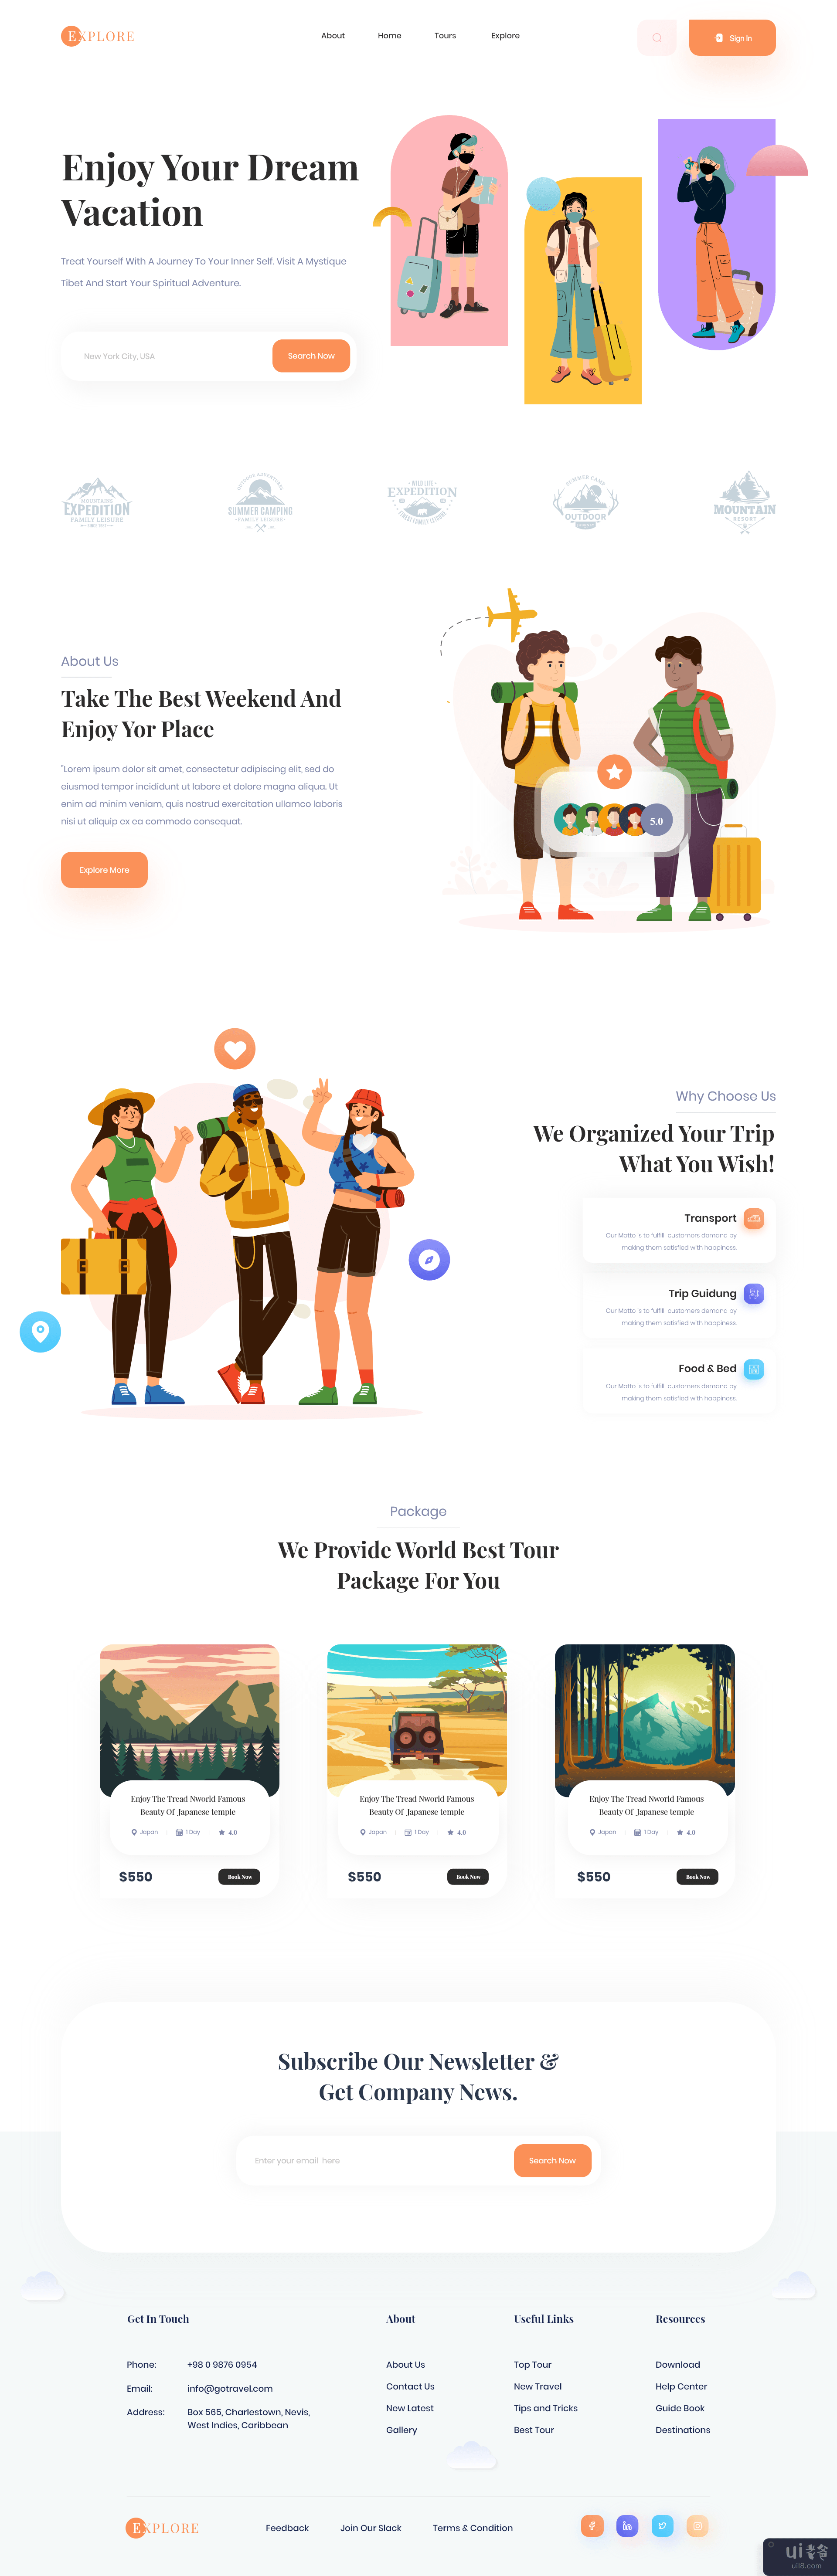 探索旅行登陆页面(Explore Travel Landing Page)插图